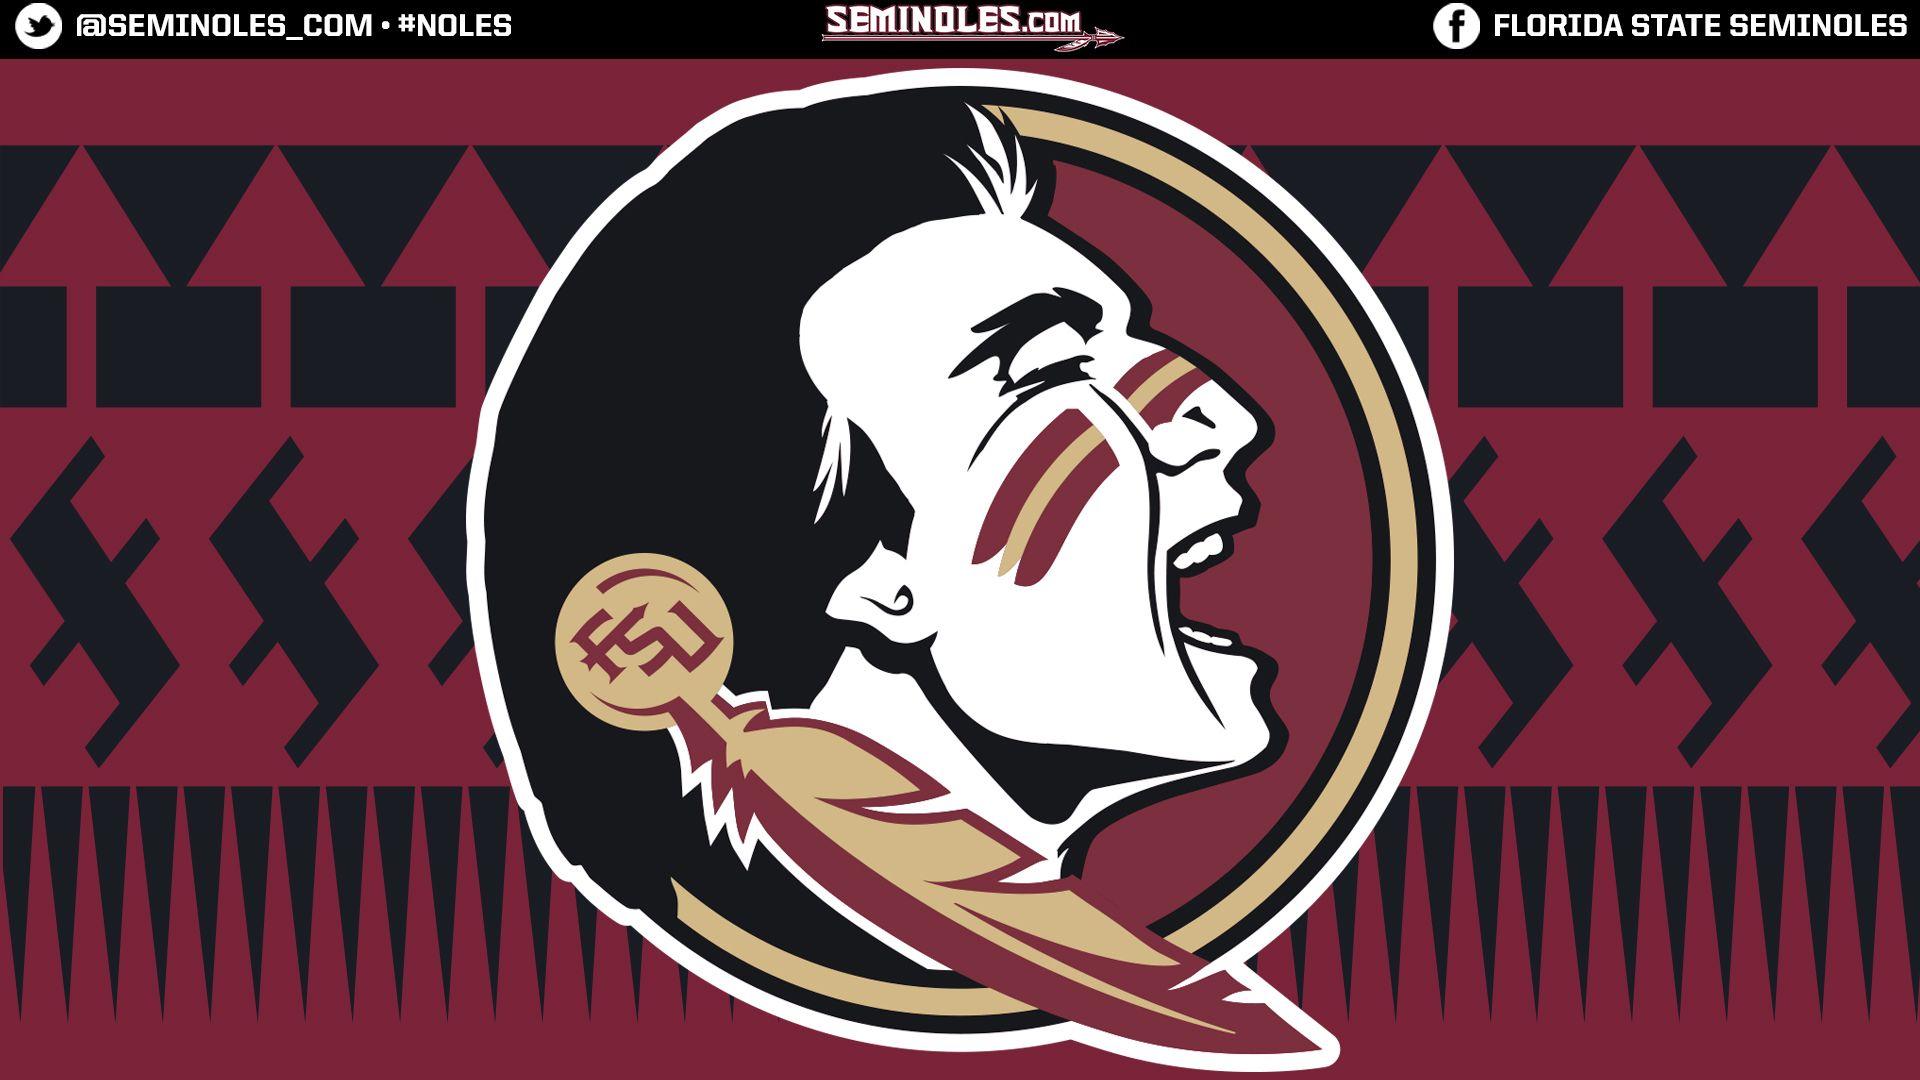 Florida State University Football Logo - Seminoles.com Desktop Wallpaper